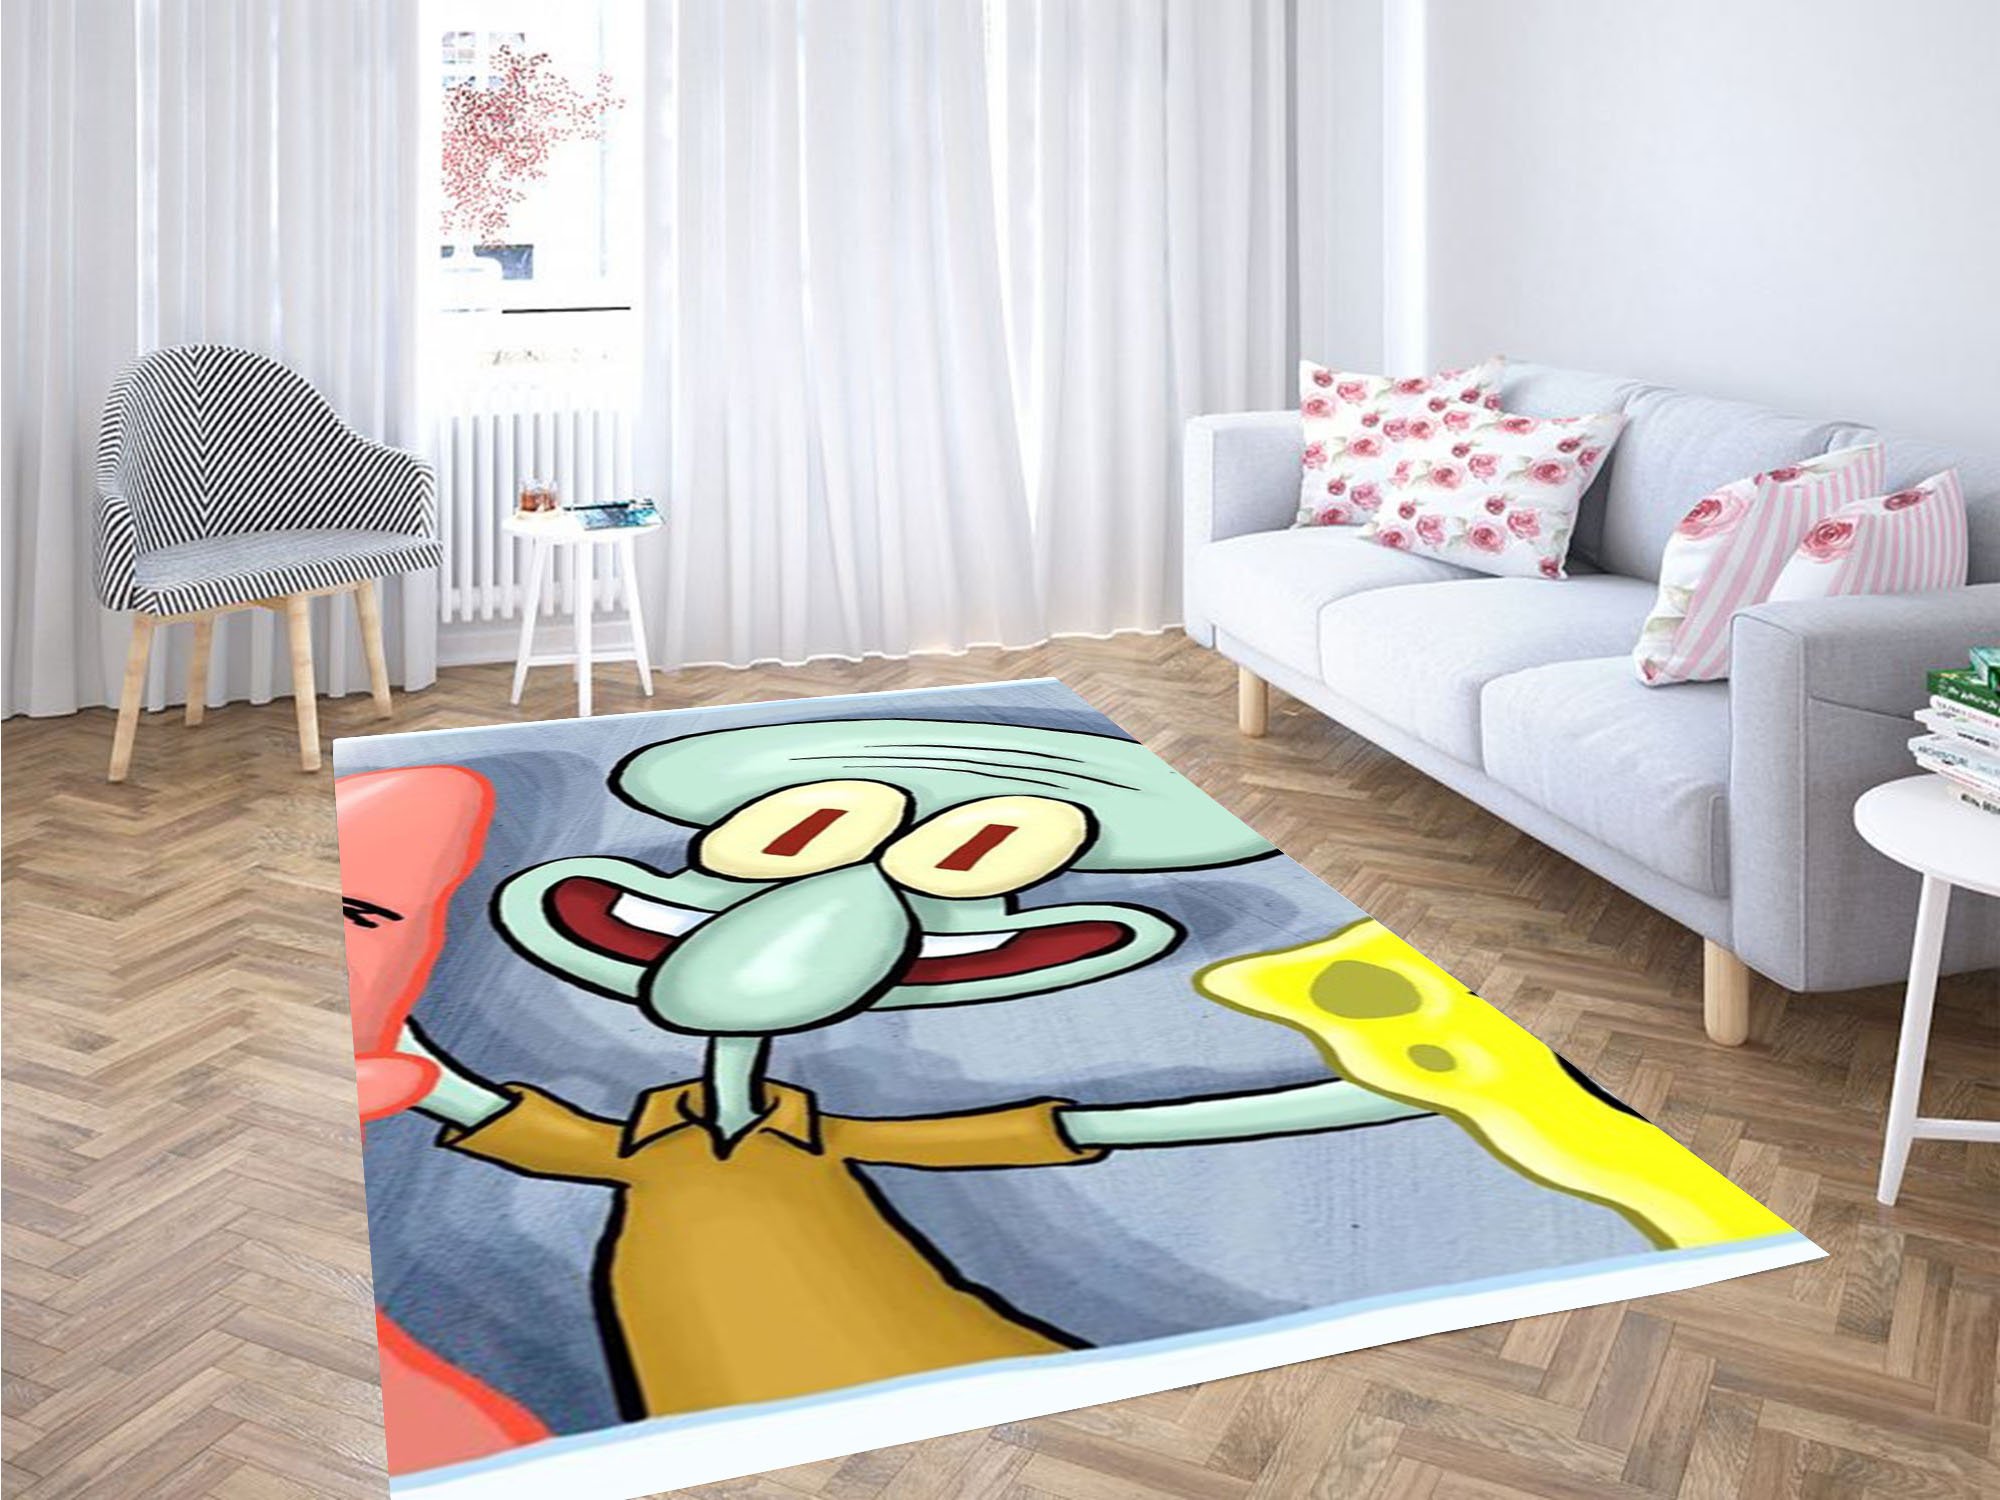 Spongebob Patrick And Squidward Wallpapers